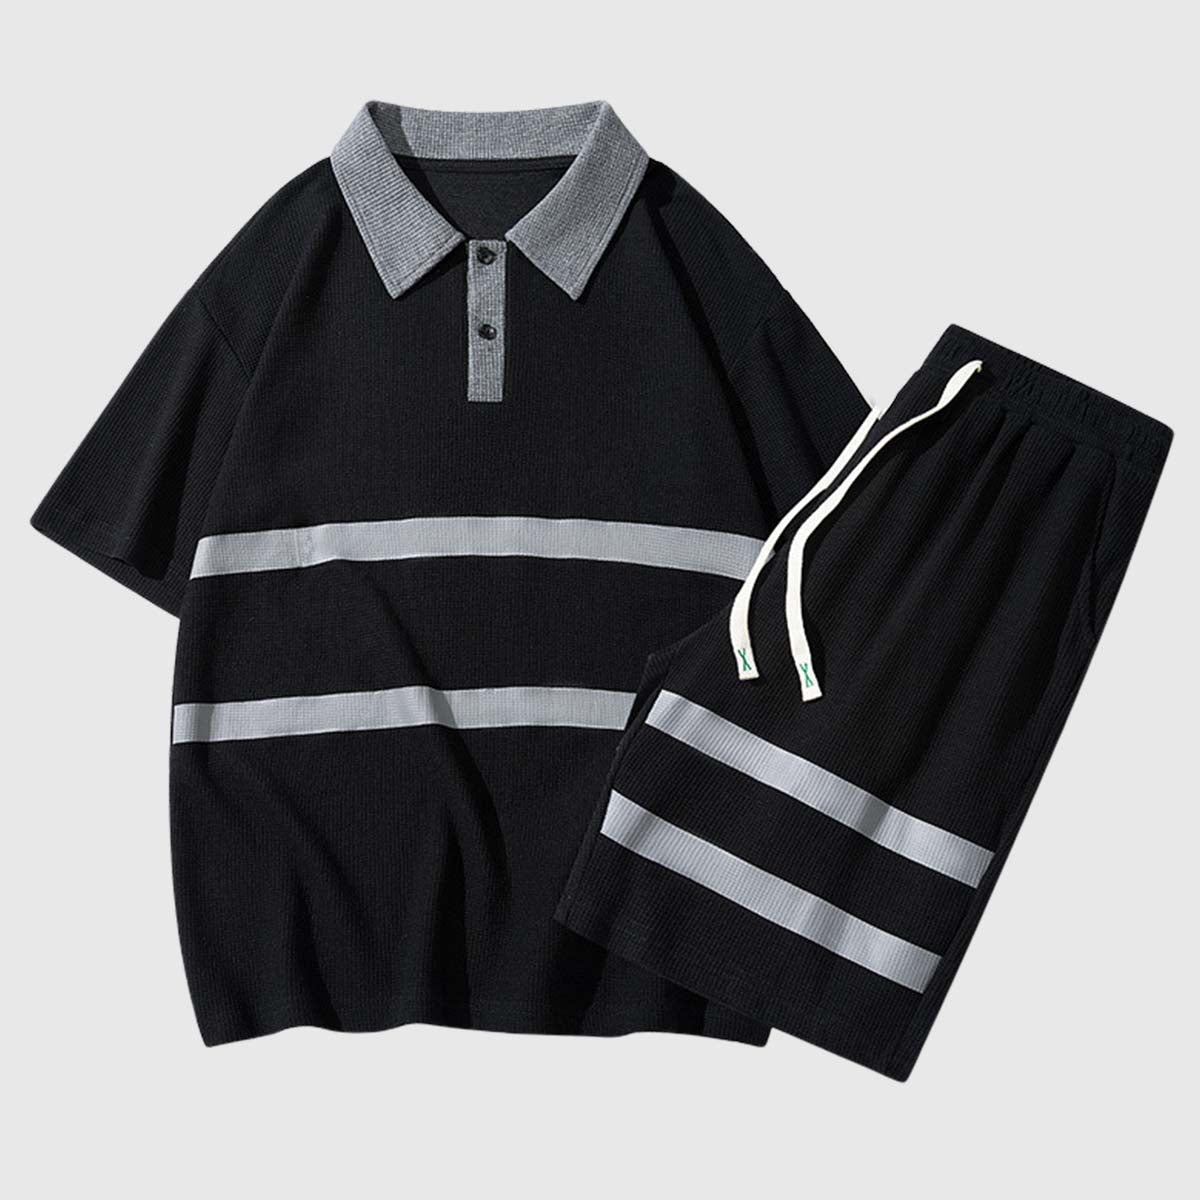 Classic Striped Knit Polo Set